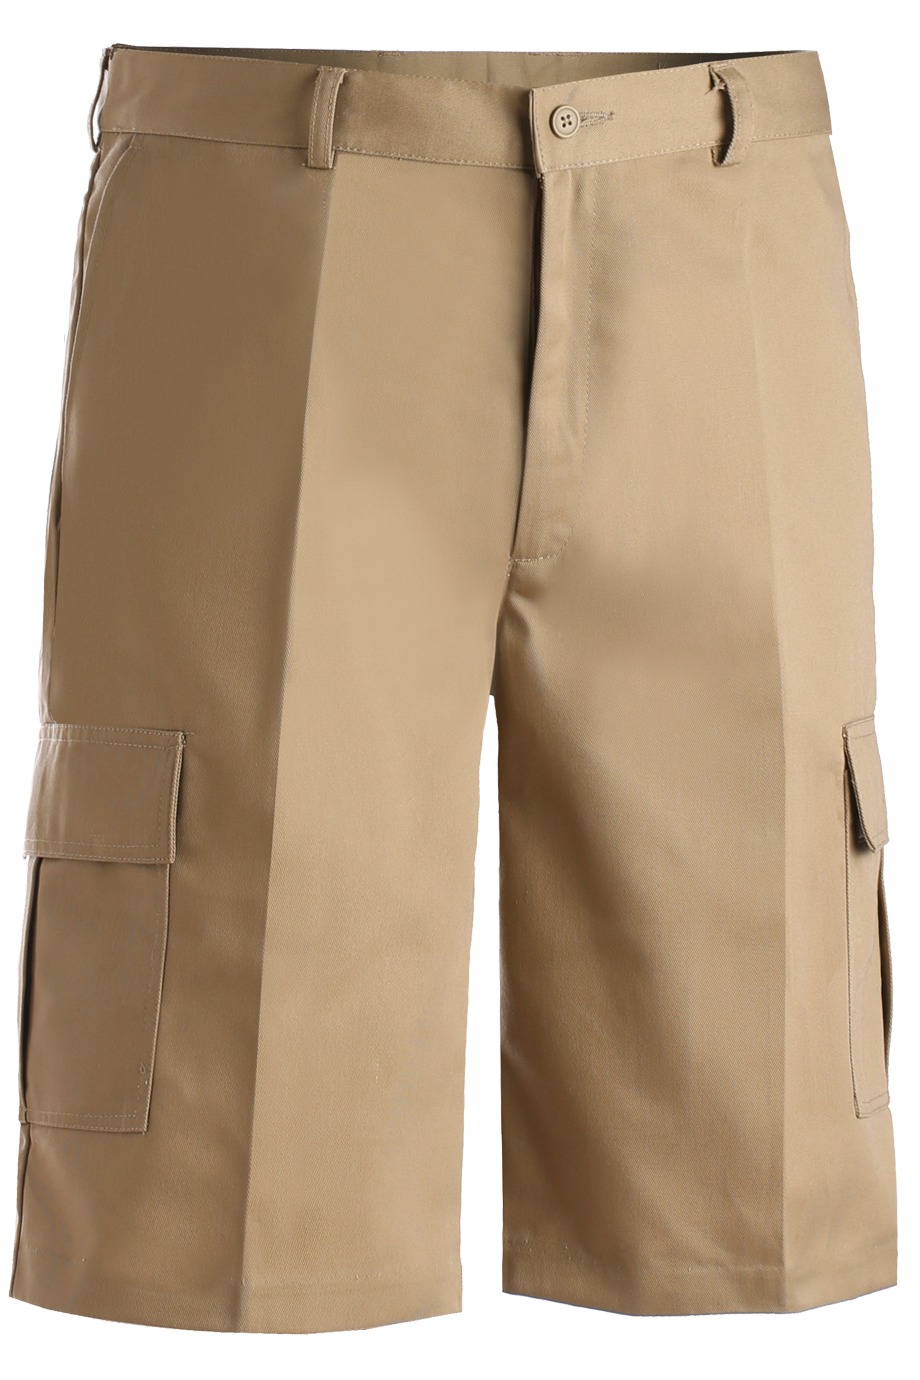 Edwards Garment 2485 - Men's Cargo Short